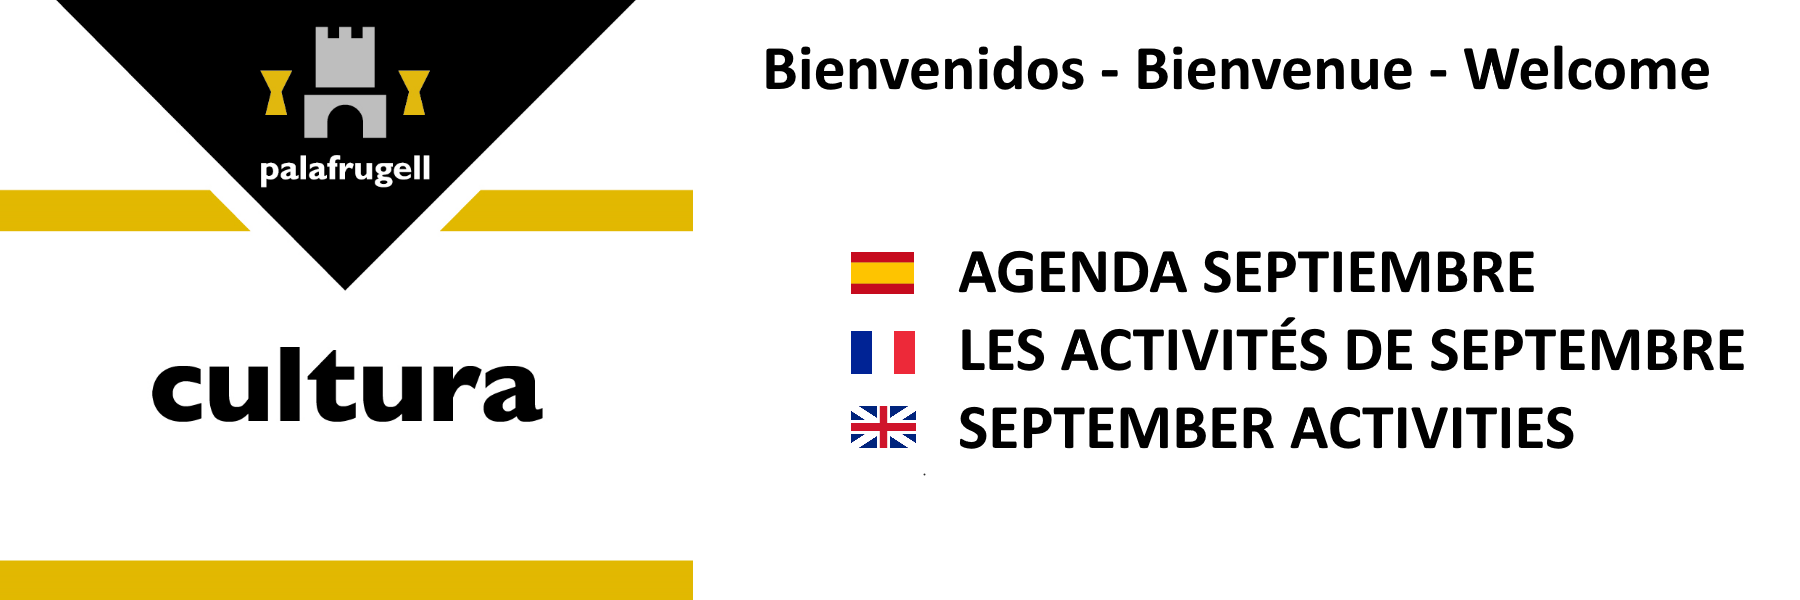 Agenda setembre altres idiomes